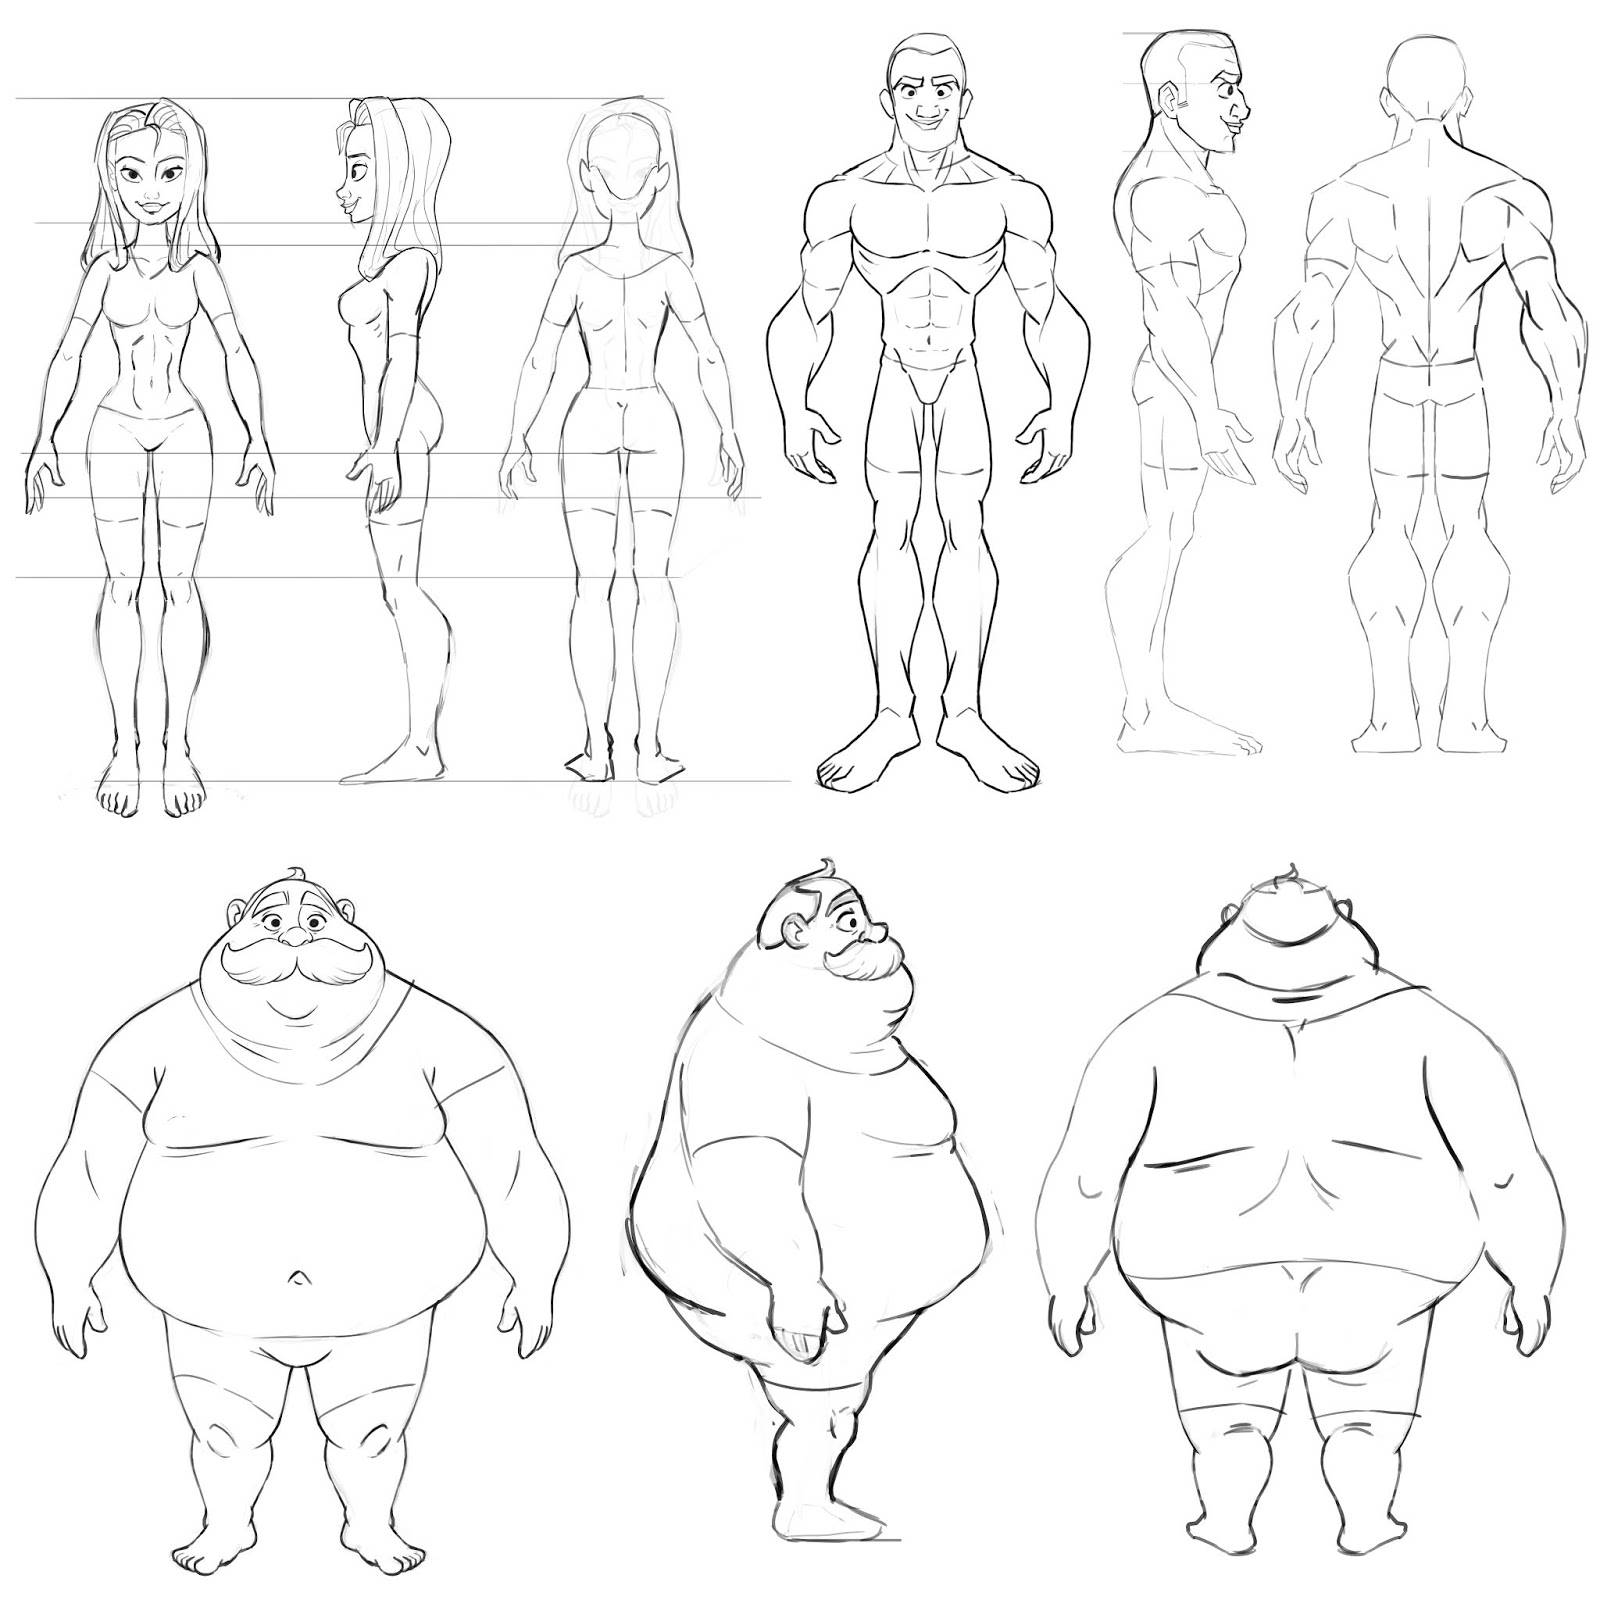 Biggest drawing. Mitch Leeuwe. Модели муж персонажей. Character body Types. Мультперсонажи референсы t-pose.